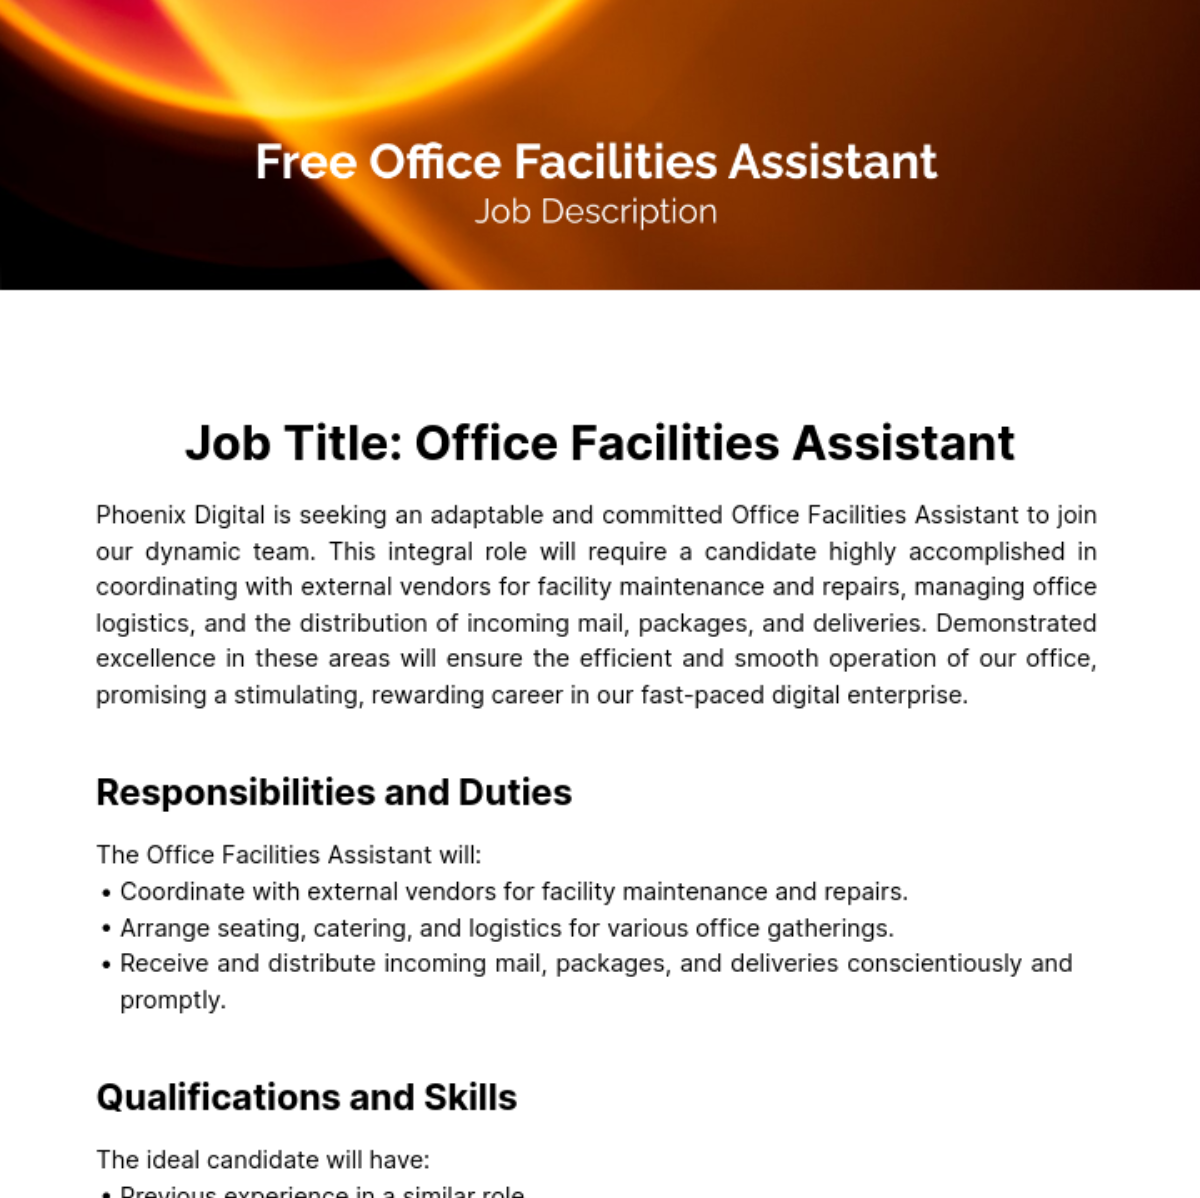 Free Office Facilities Assistant Job Description Template